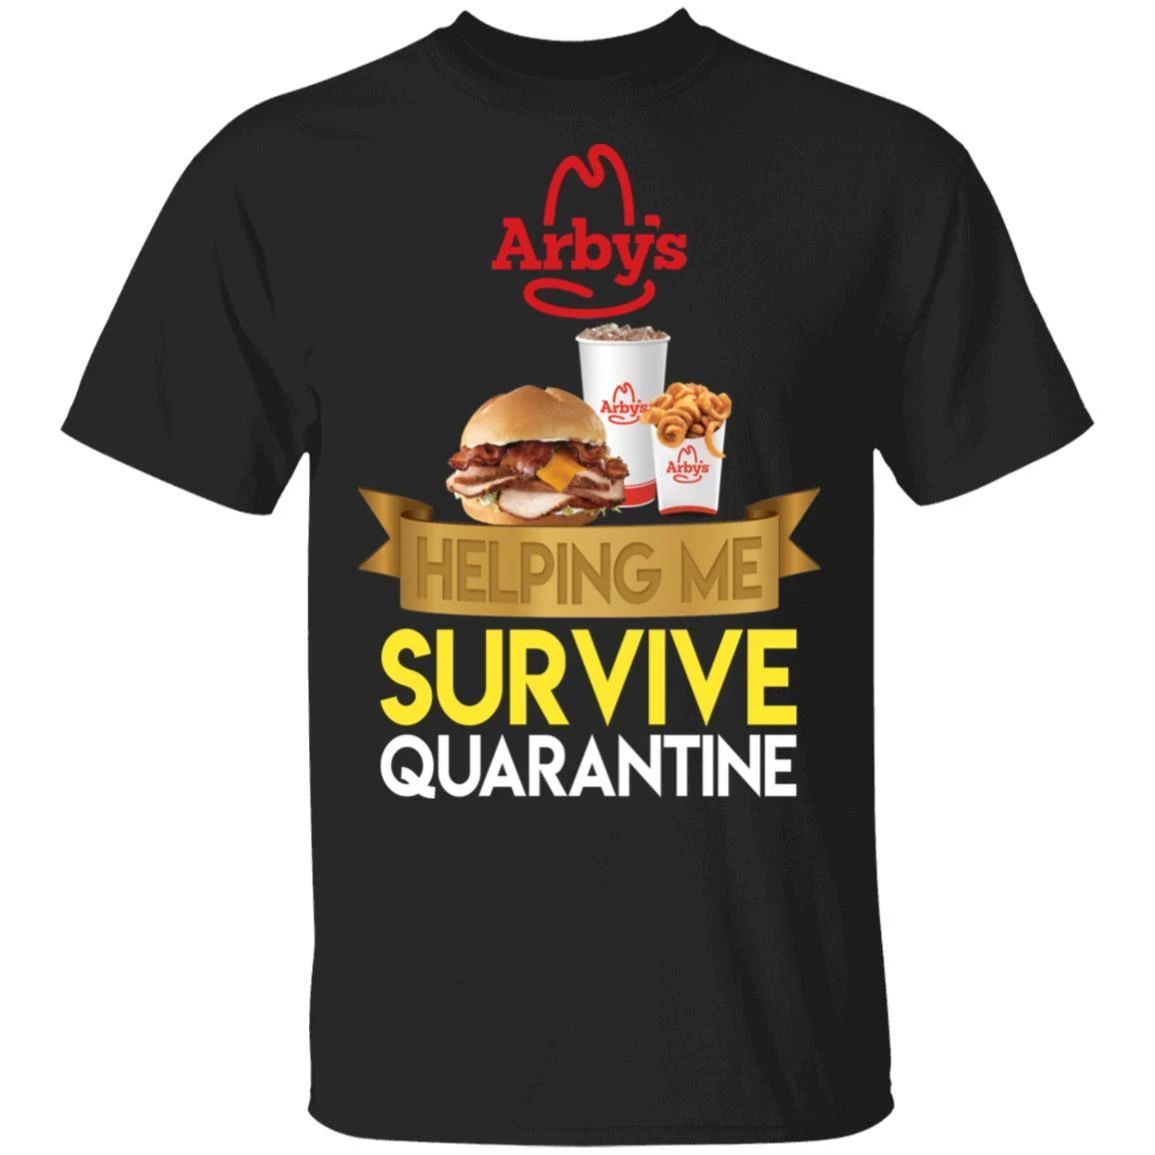 Arby’s Helping Me Survive Quarantine T-shirt